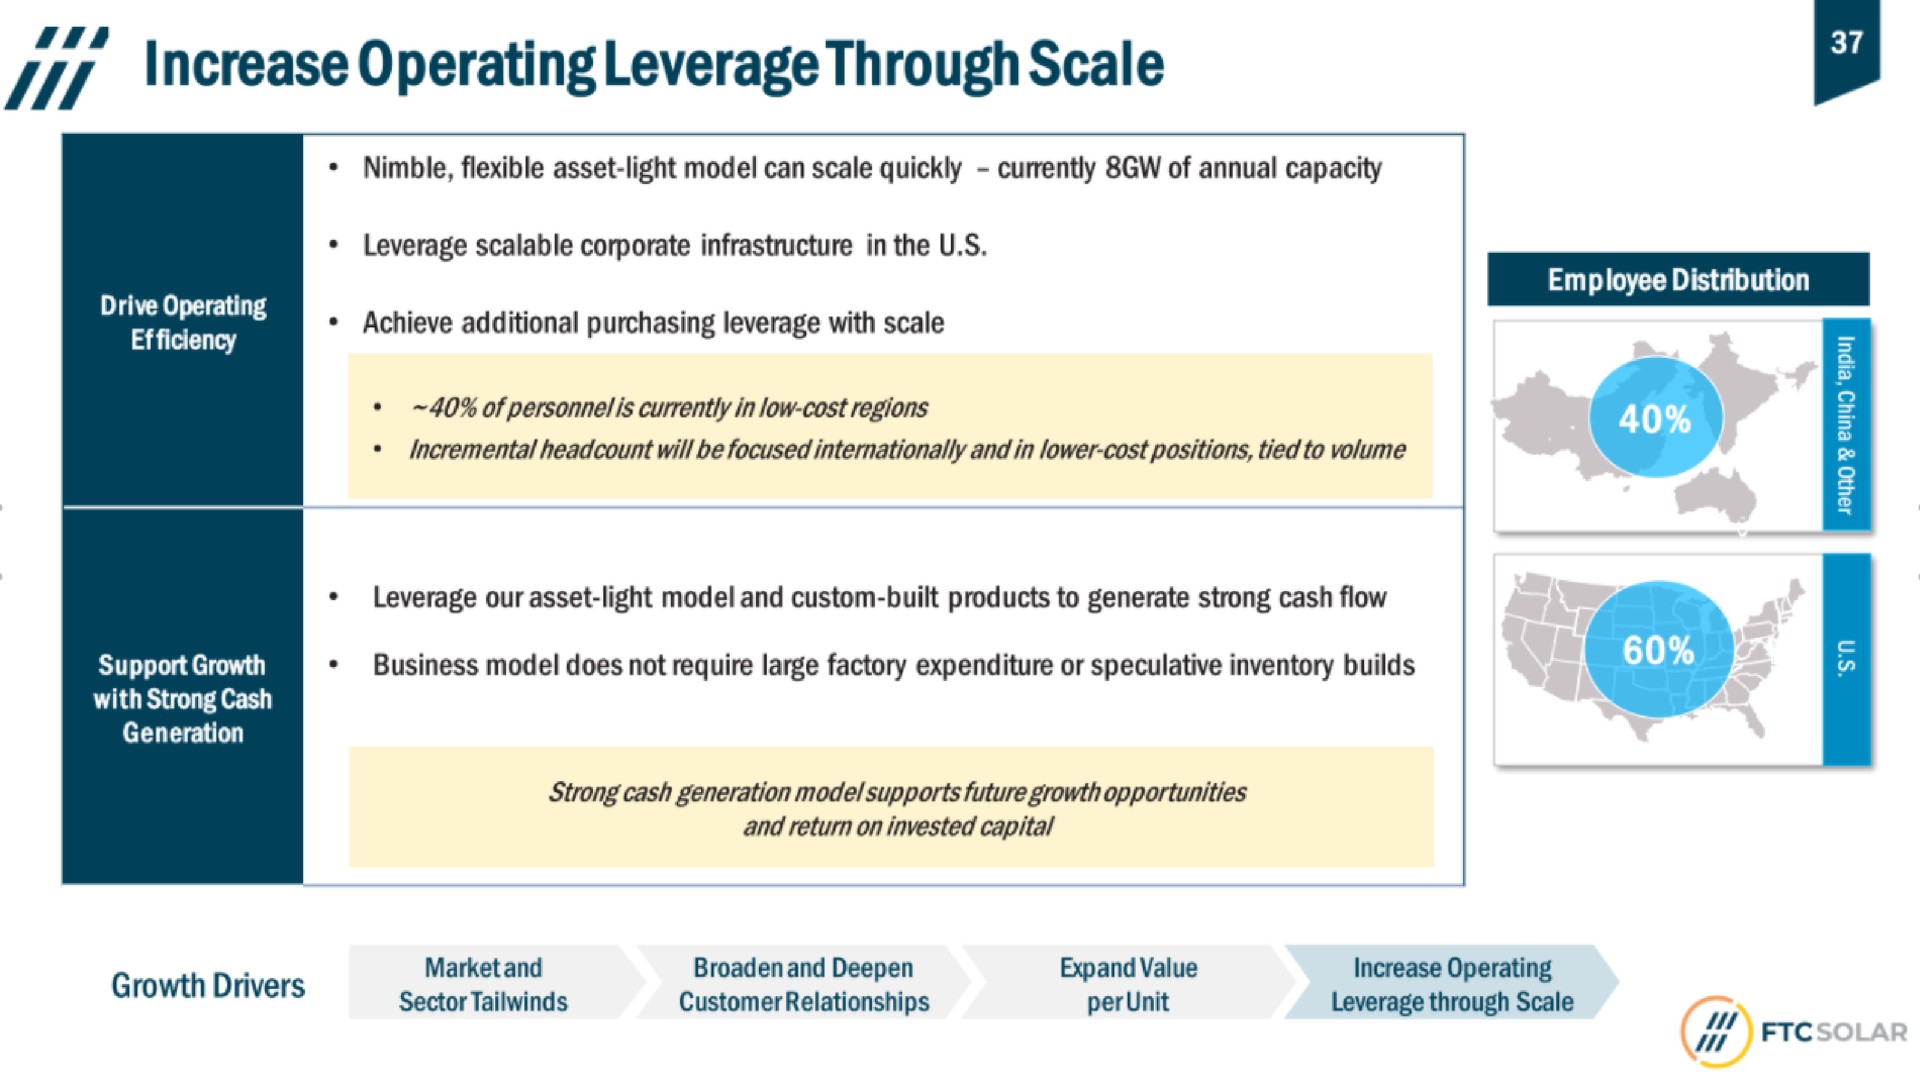 operating leverage through scale | FTC Solar